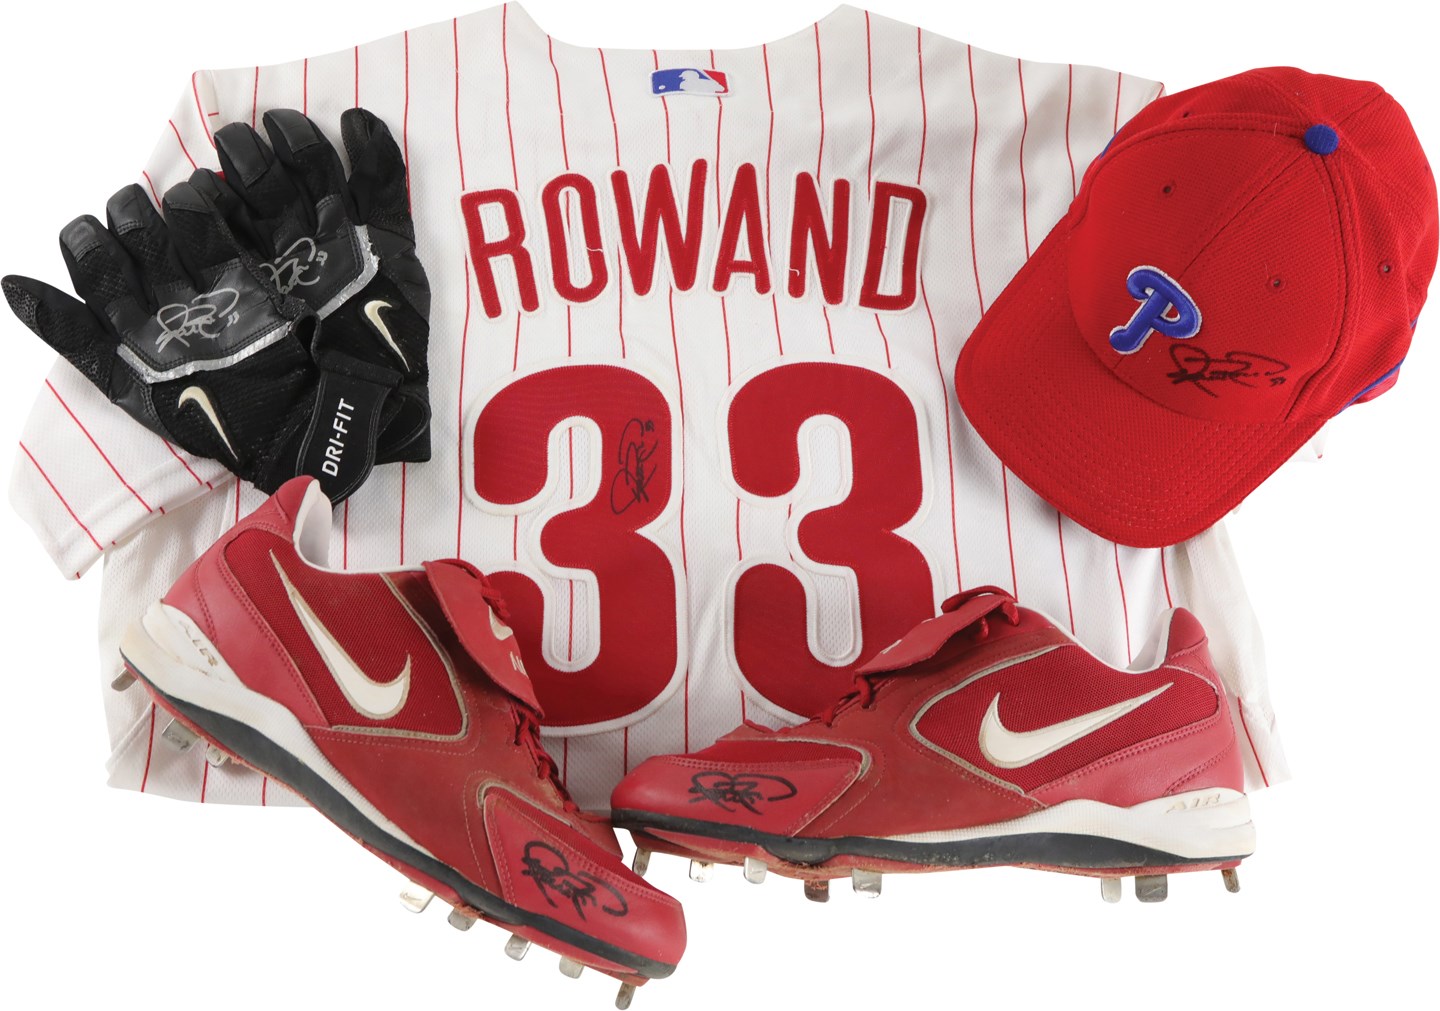 Baseball Equipment - 2007 Aaron Rowand Philadelphia Phillies Game Used Ensemble